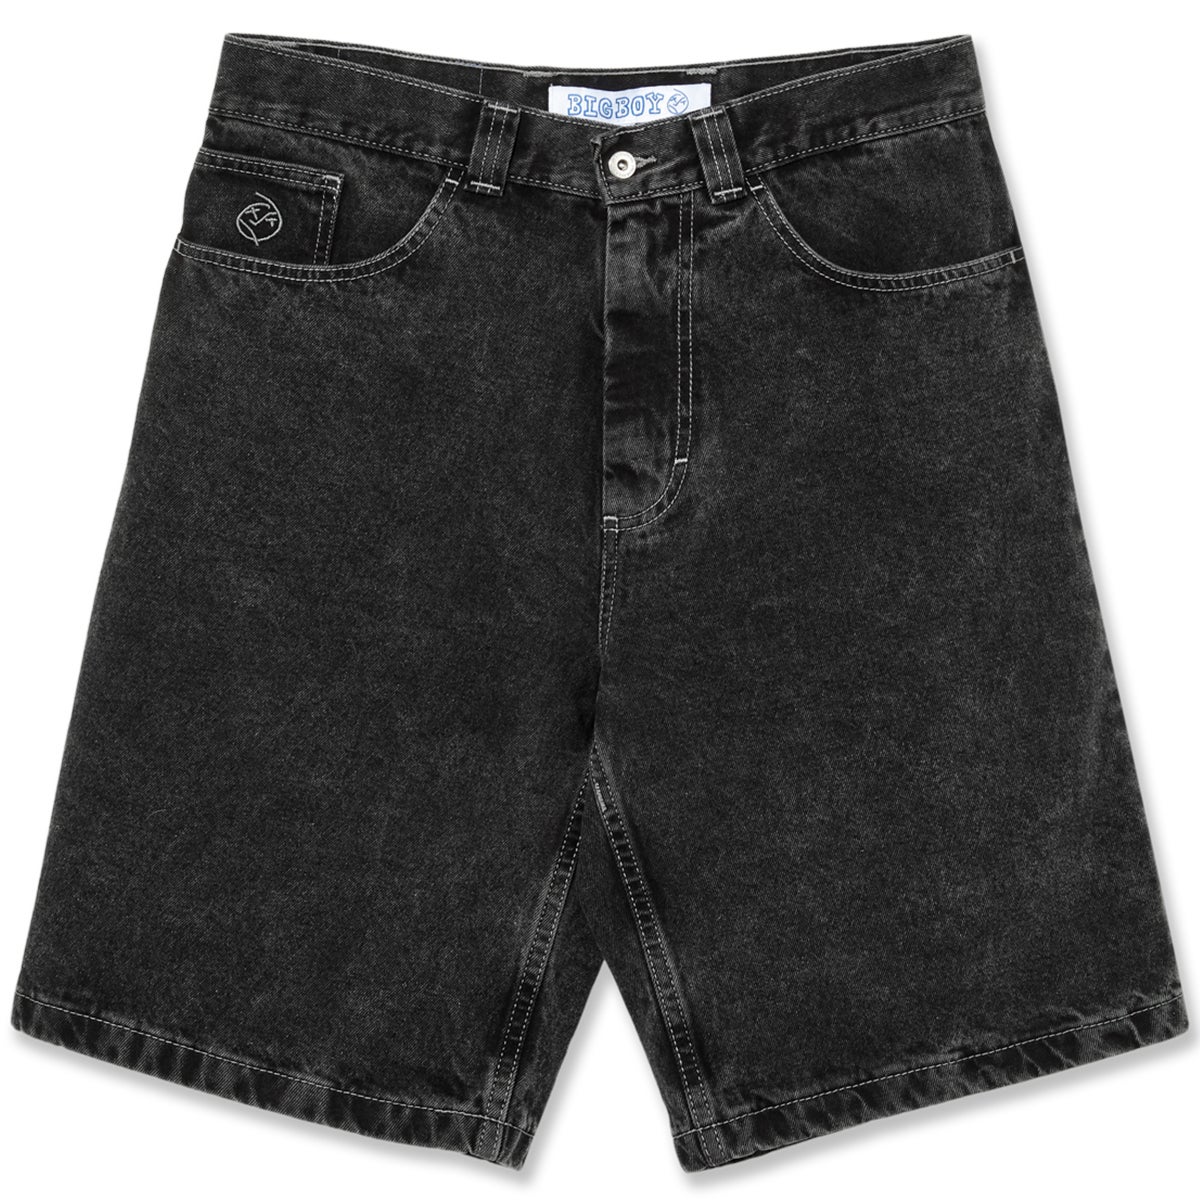 Polar Big Boy Shorts in Black | Boardertown